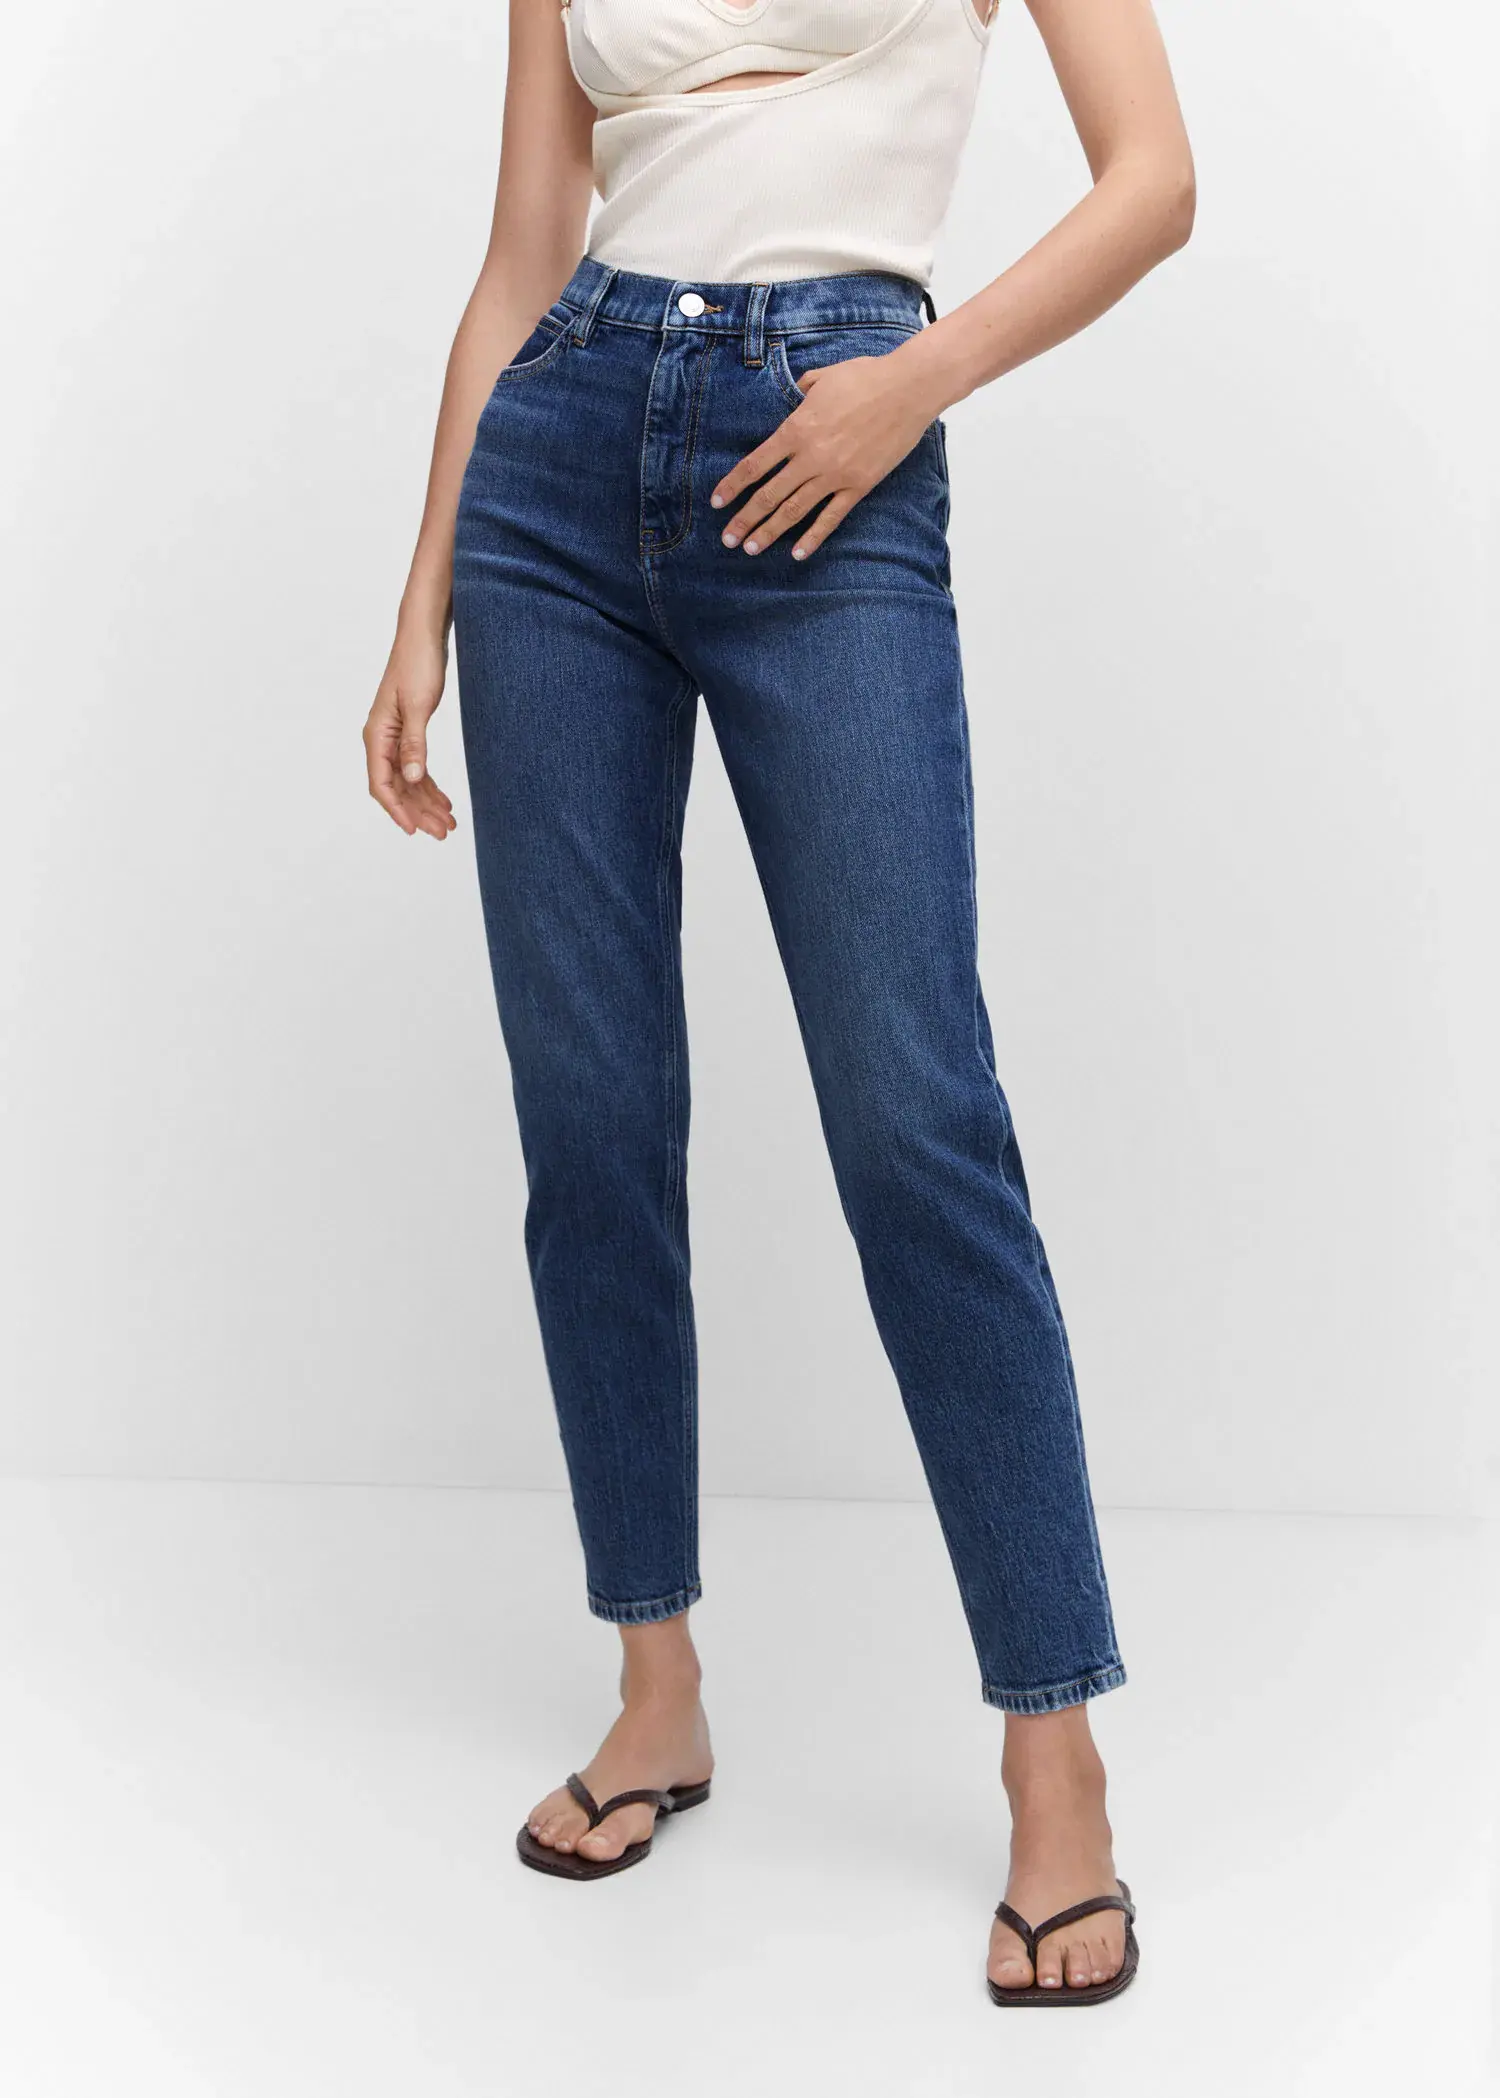 Mango Comfort Mom-Jeans mit hoher Bundhöhe. 1